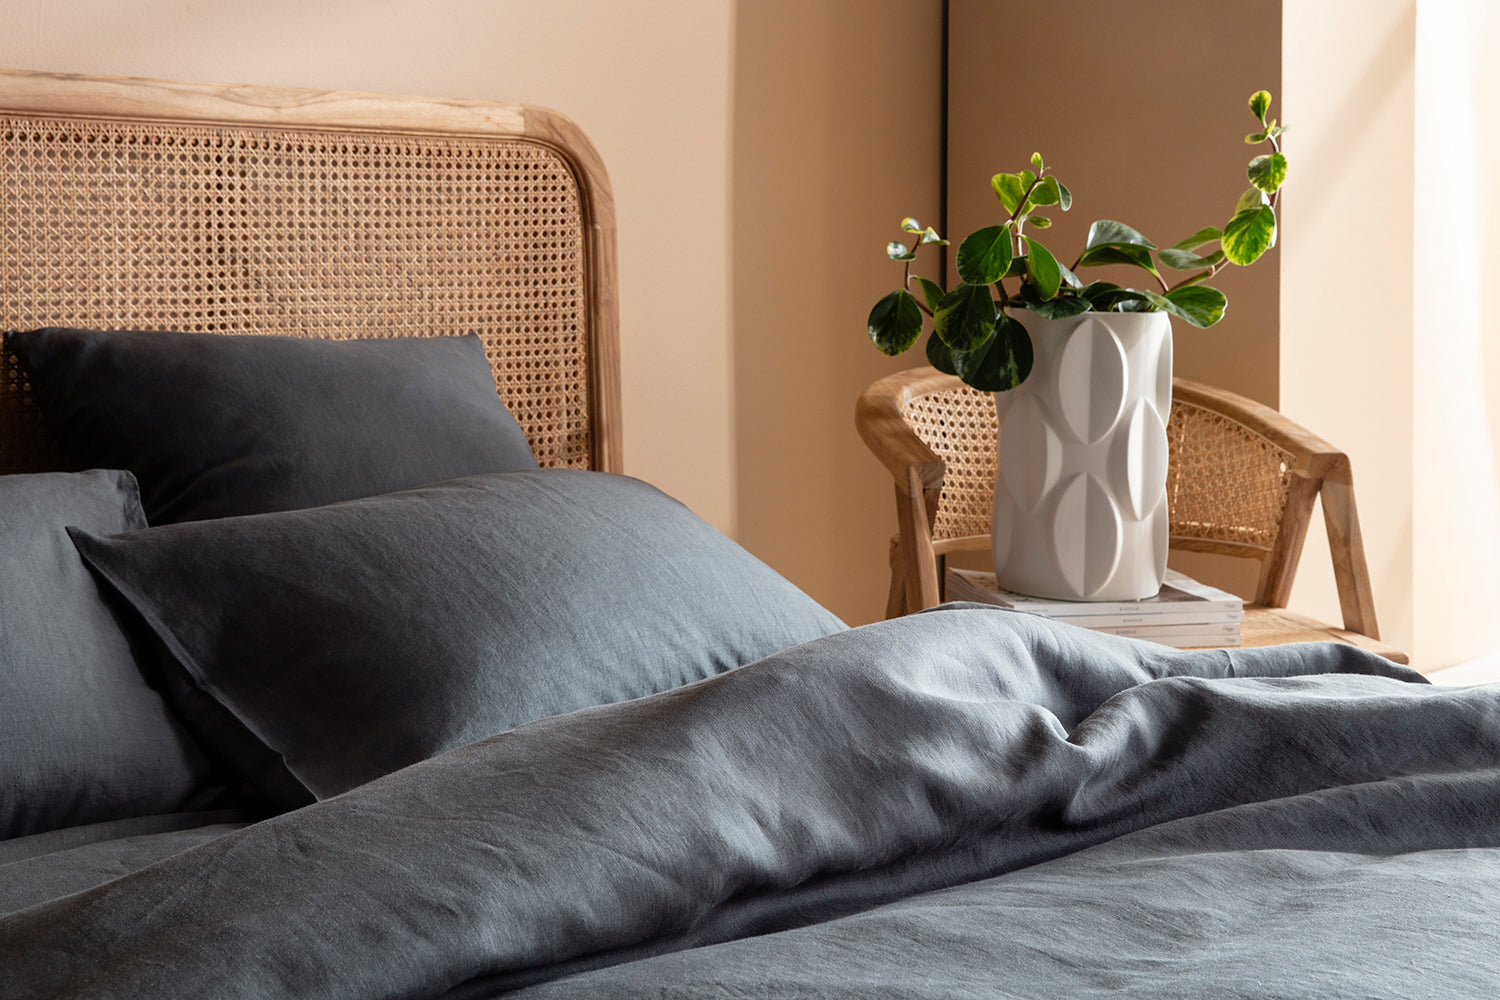 French Linen Charcoal Quilt Cover Set BED LINEN KAS AUSTRALIA 